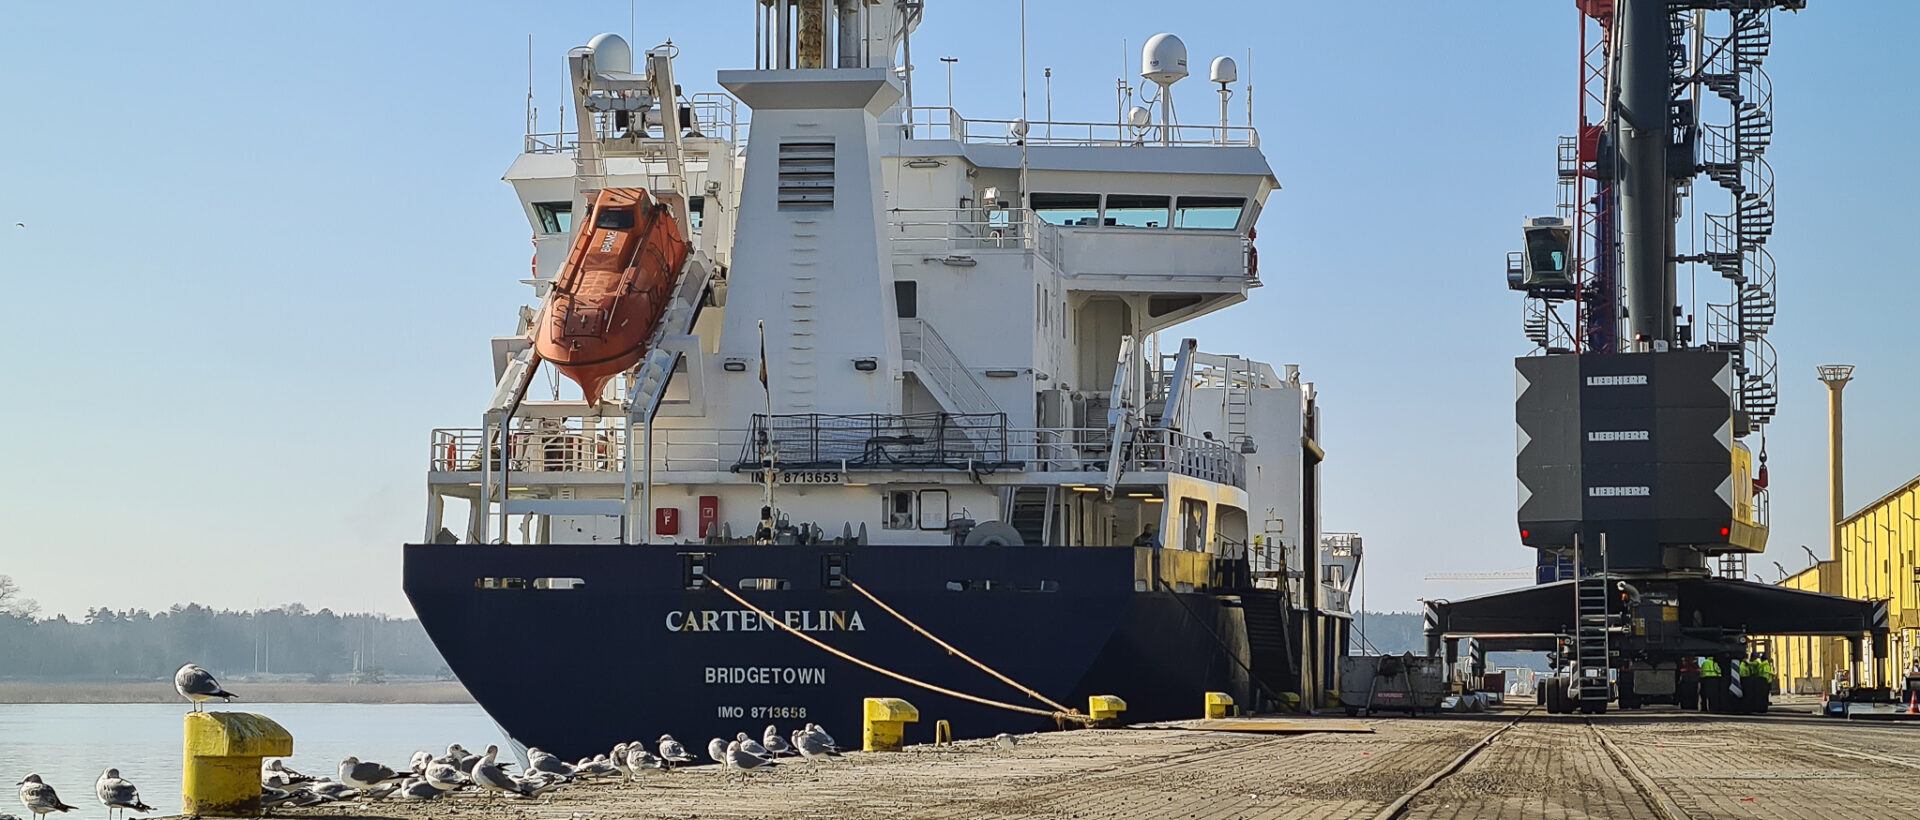 The line offers cargo transport between the Port of Swinoujscie and Norwegian coast